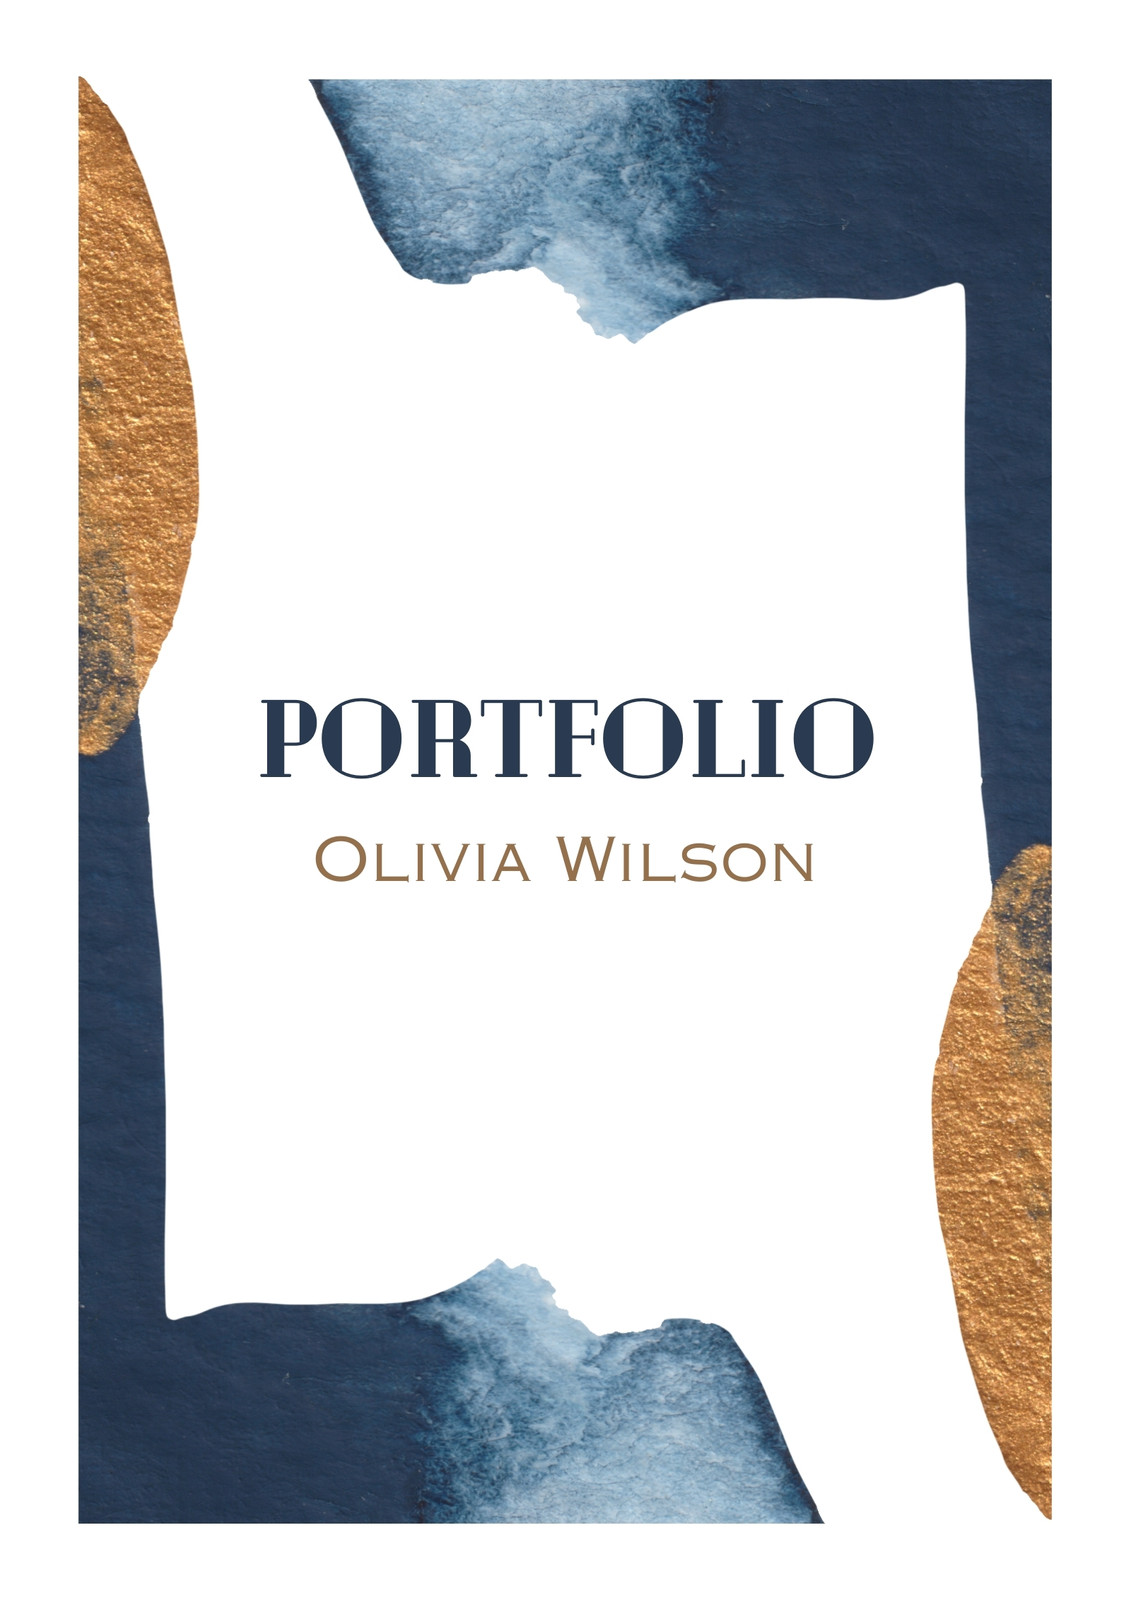 career portfolio cover page template